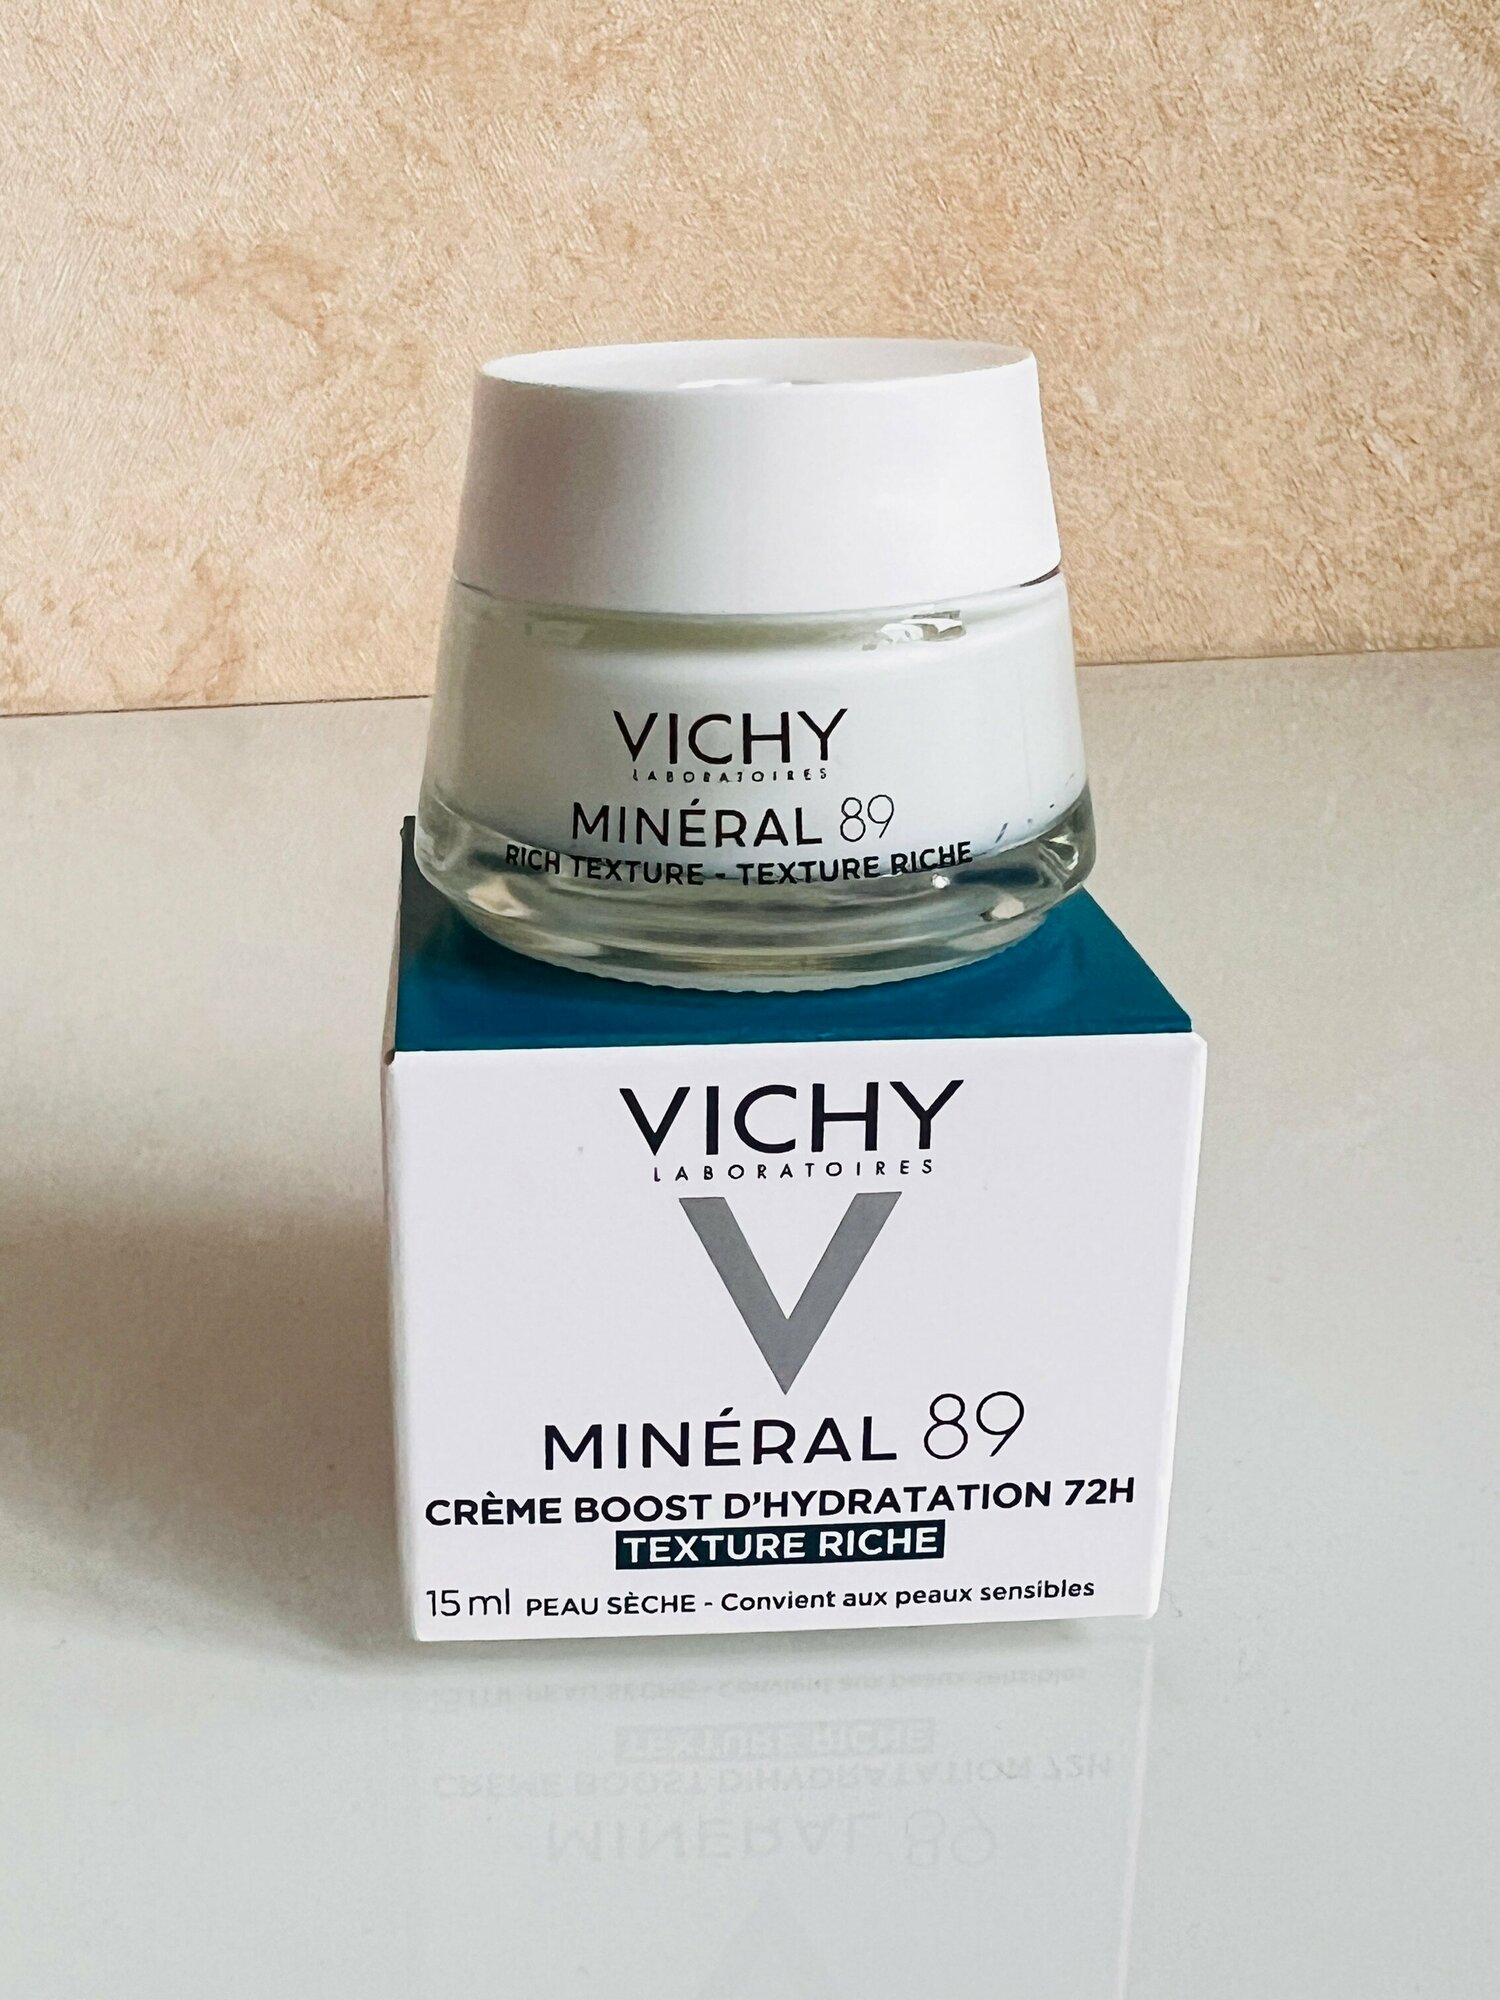 Крем для лица "Mineral 89" от бренда Vichy